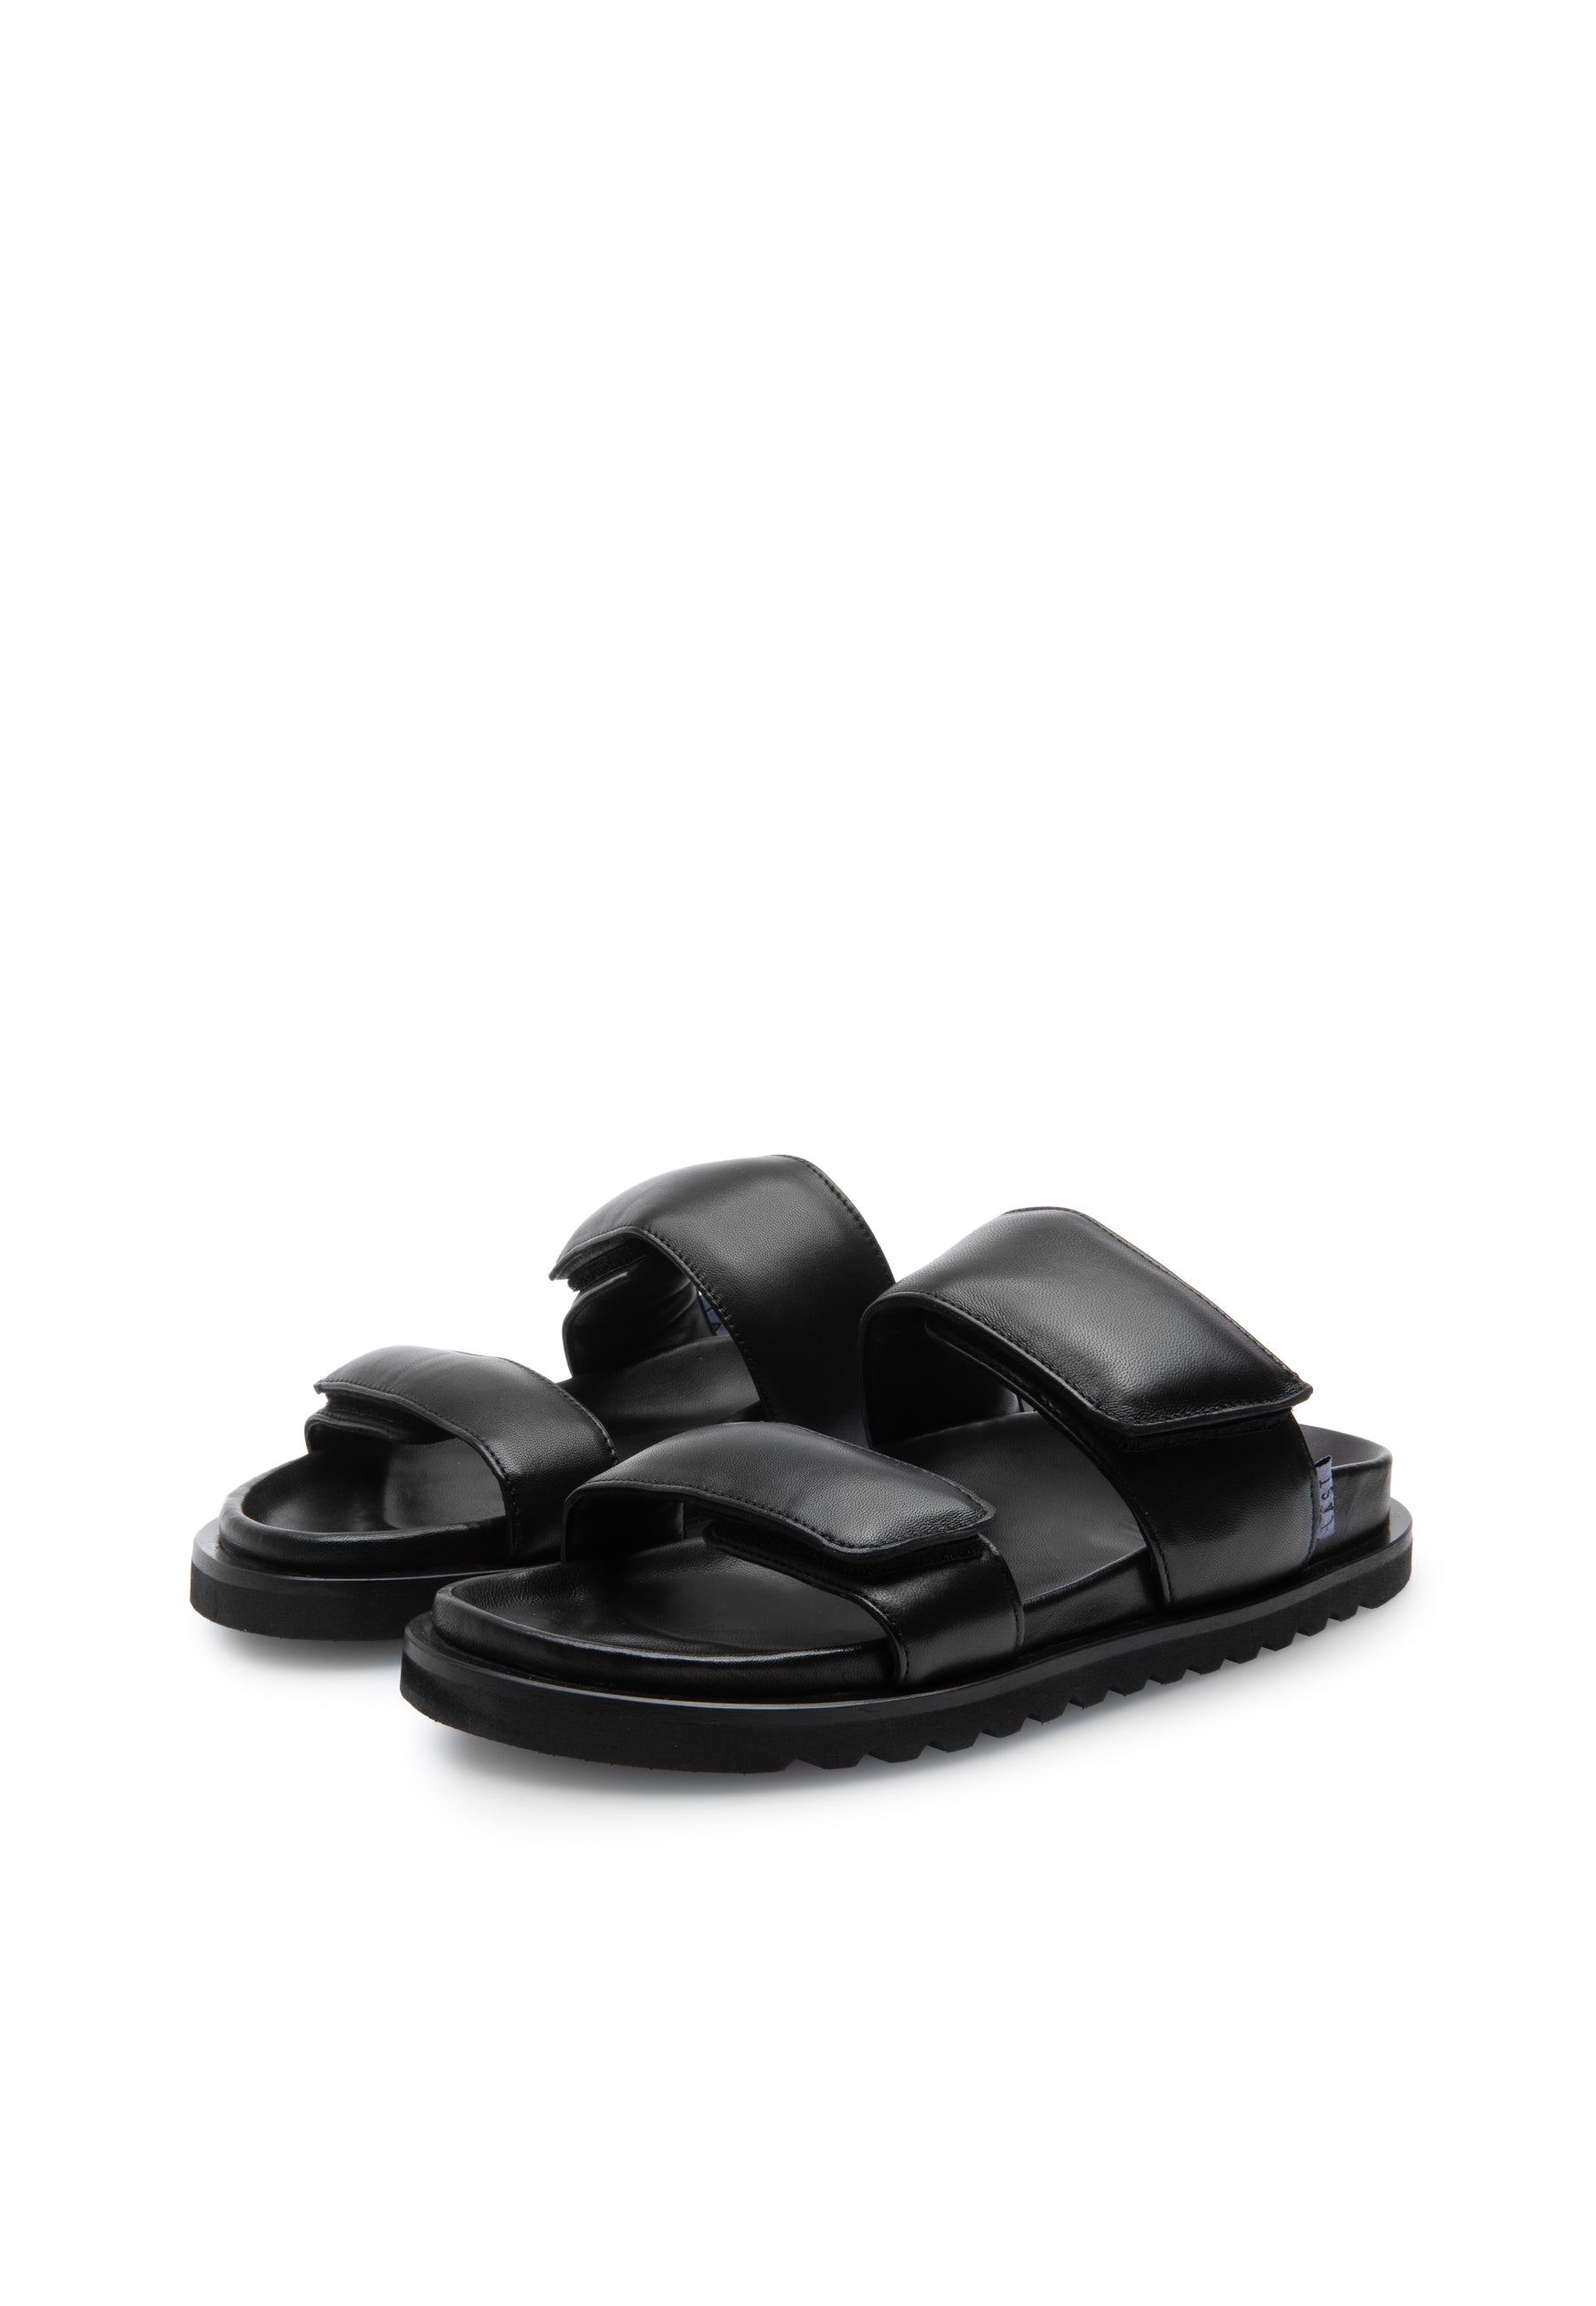 Corine Black Leather Puffy Sandals LAST1516 - 3